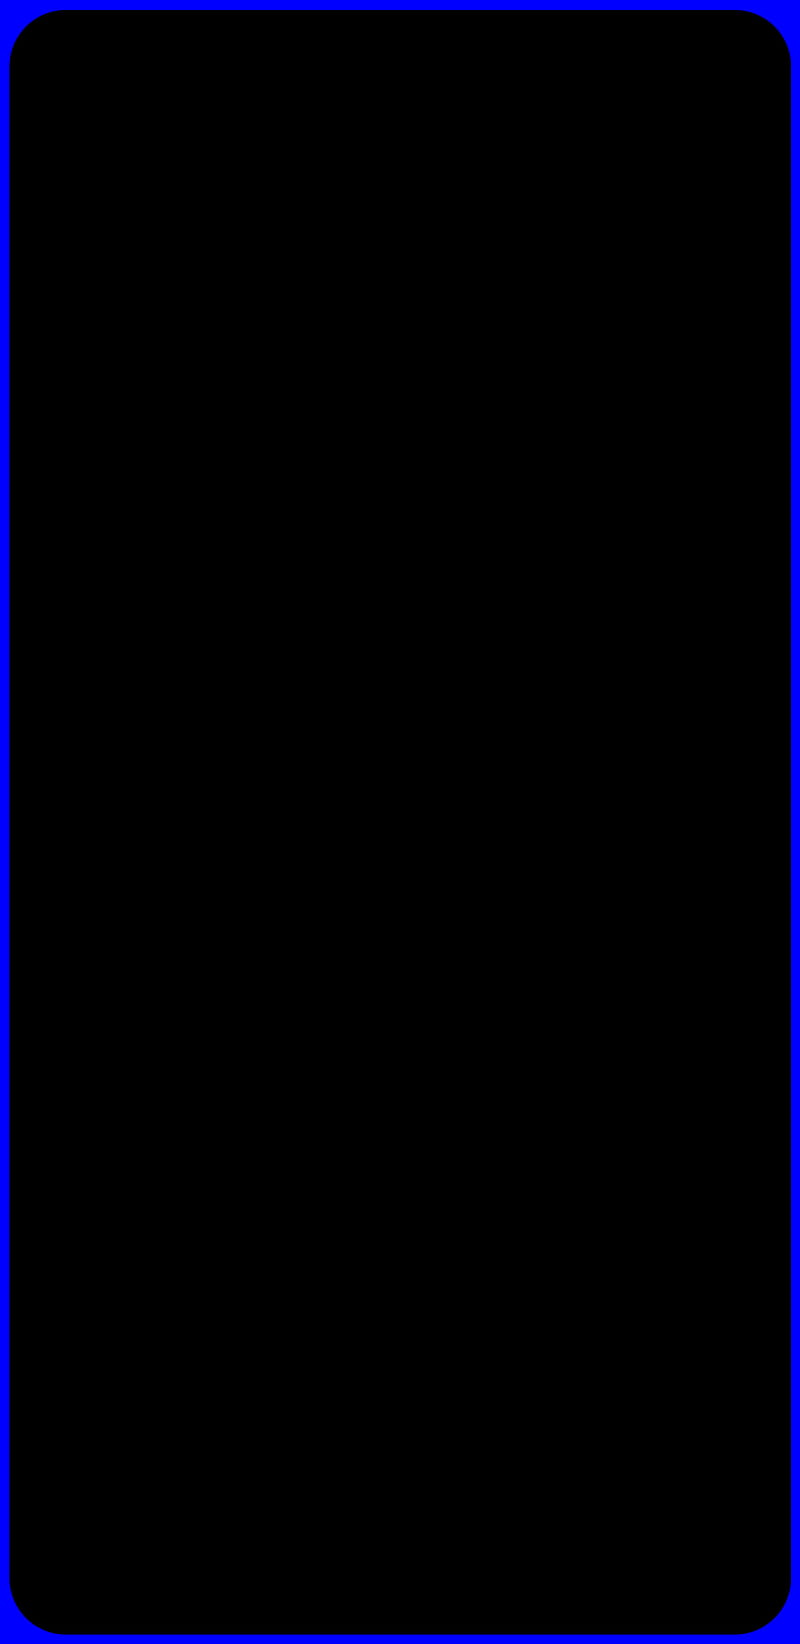 Edge Lighting Blue black led s9 s9 plus amoled HD phone wallpaper   Peakpx